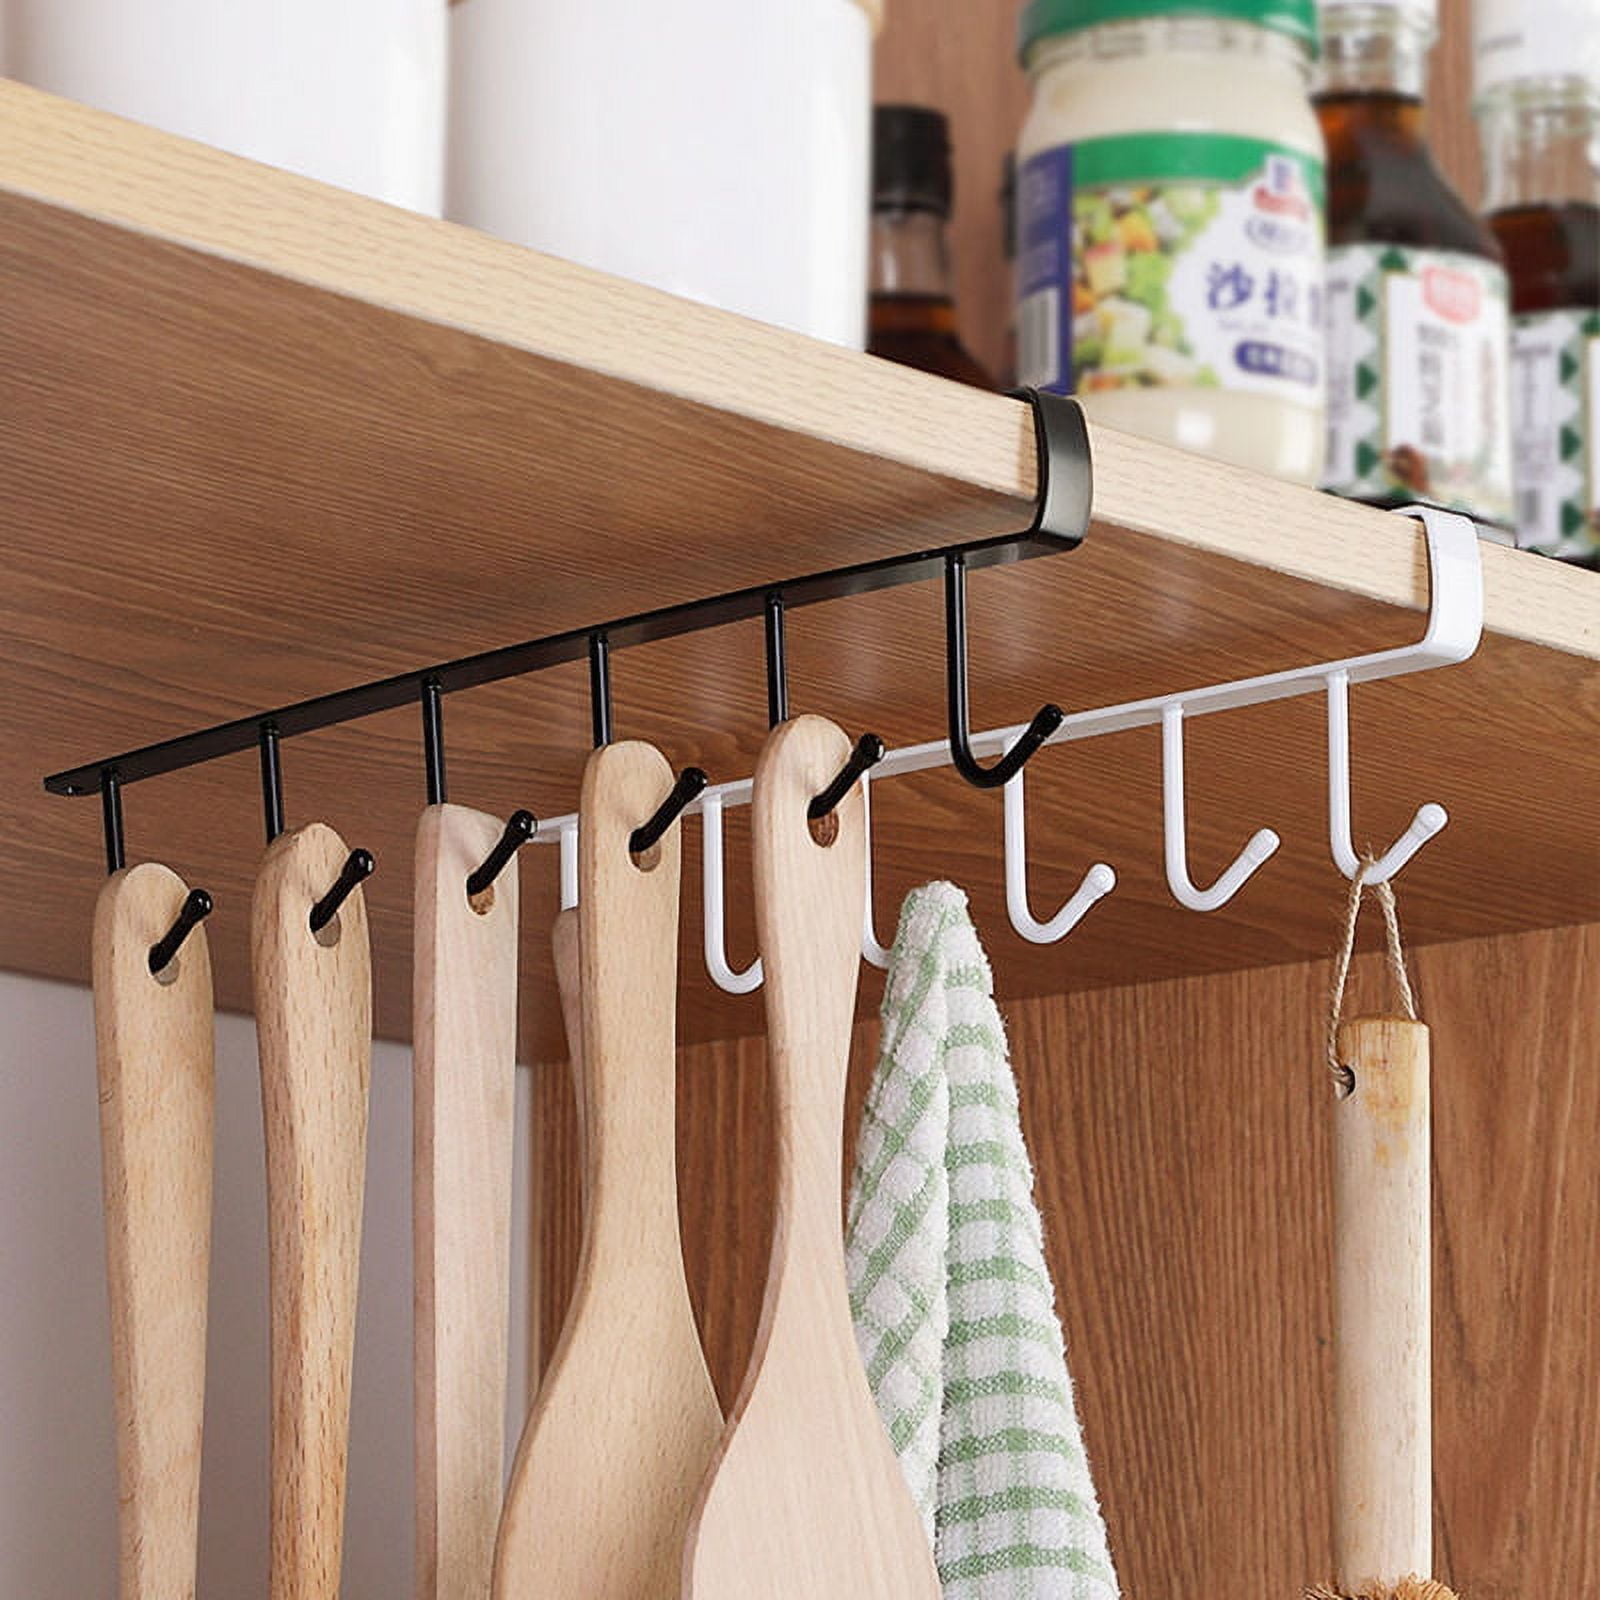 Buy Kitchen Storage Coffee Cup Holder Wall Décor Rack Shelf